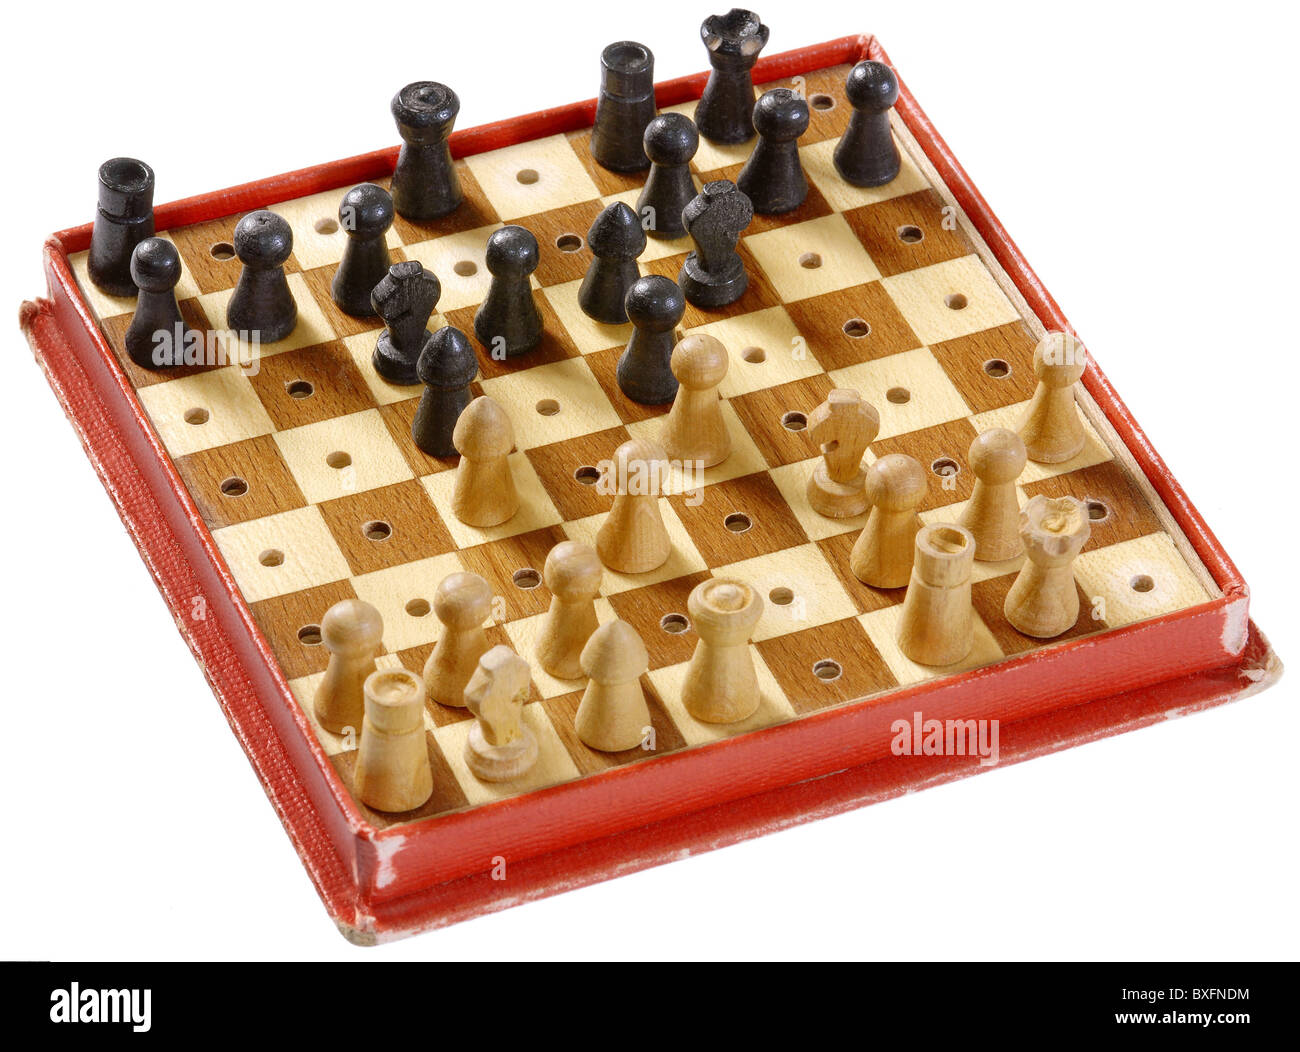 Partien, Brettspiele, Schach, Reiseschach, Deutschland, um 1929, Additional-Rights-Clearences-not available Stockfoto